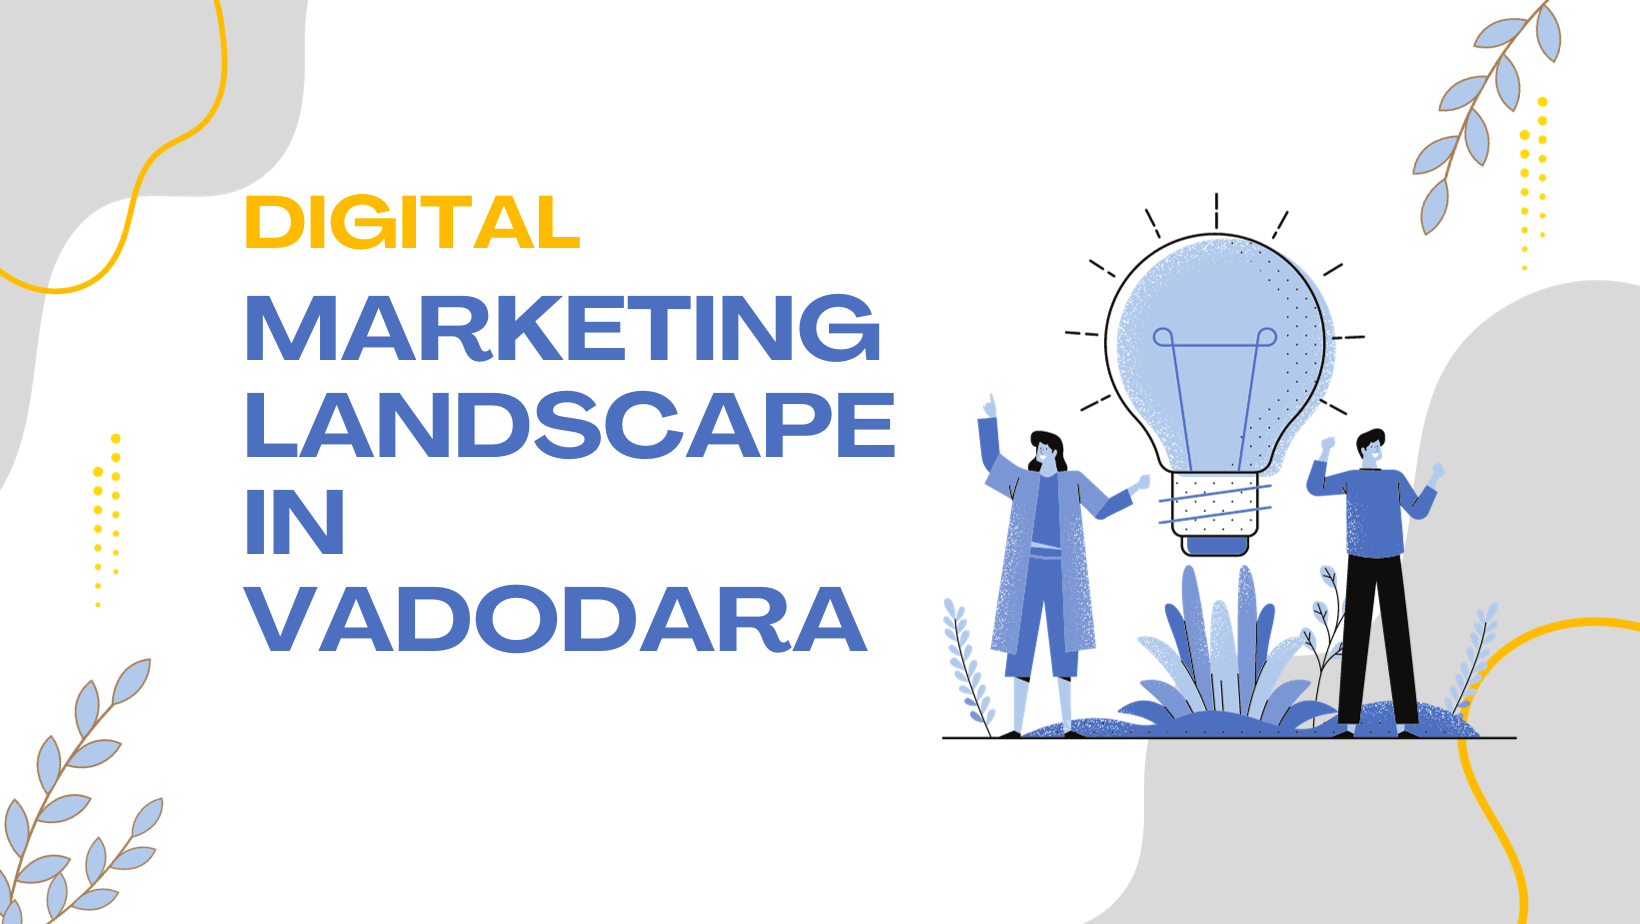 Digital Marketing Landscape In Vadodara